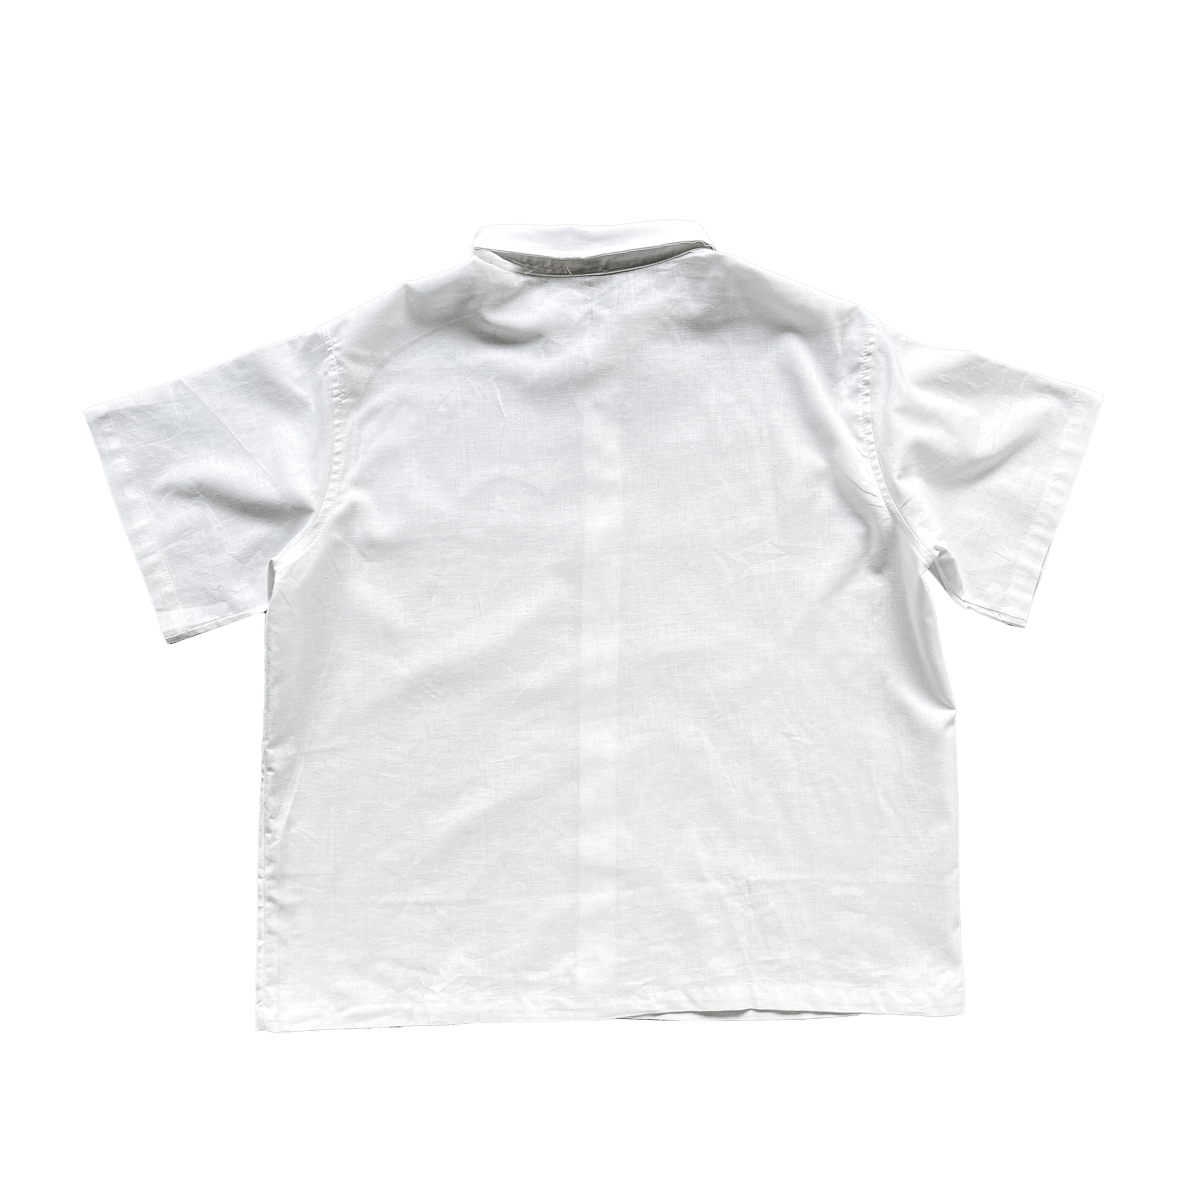 Image of White boxyfit linen shirt